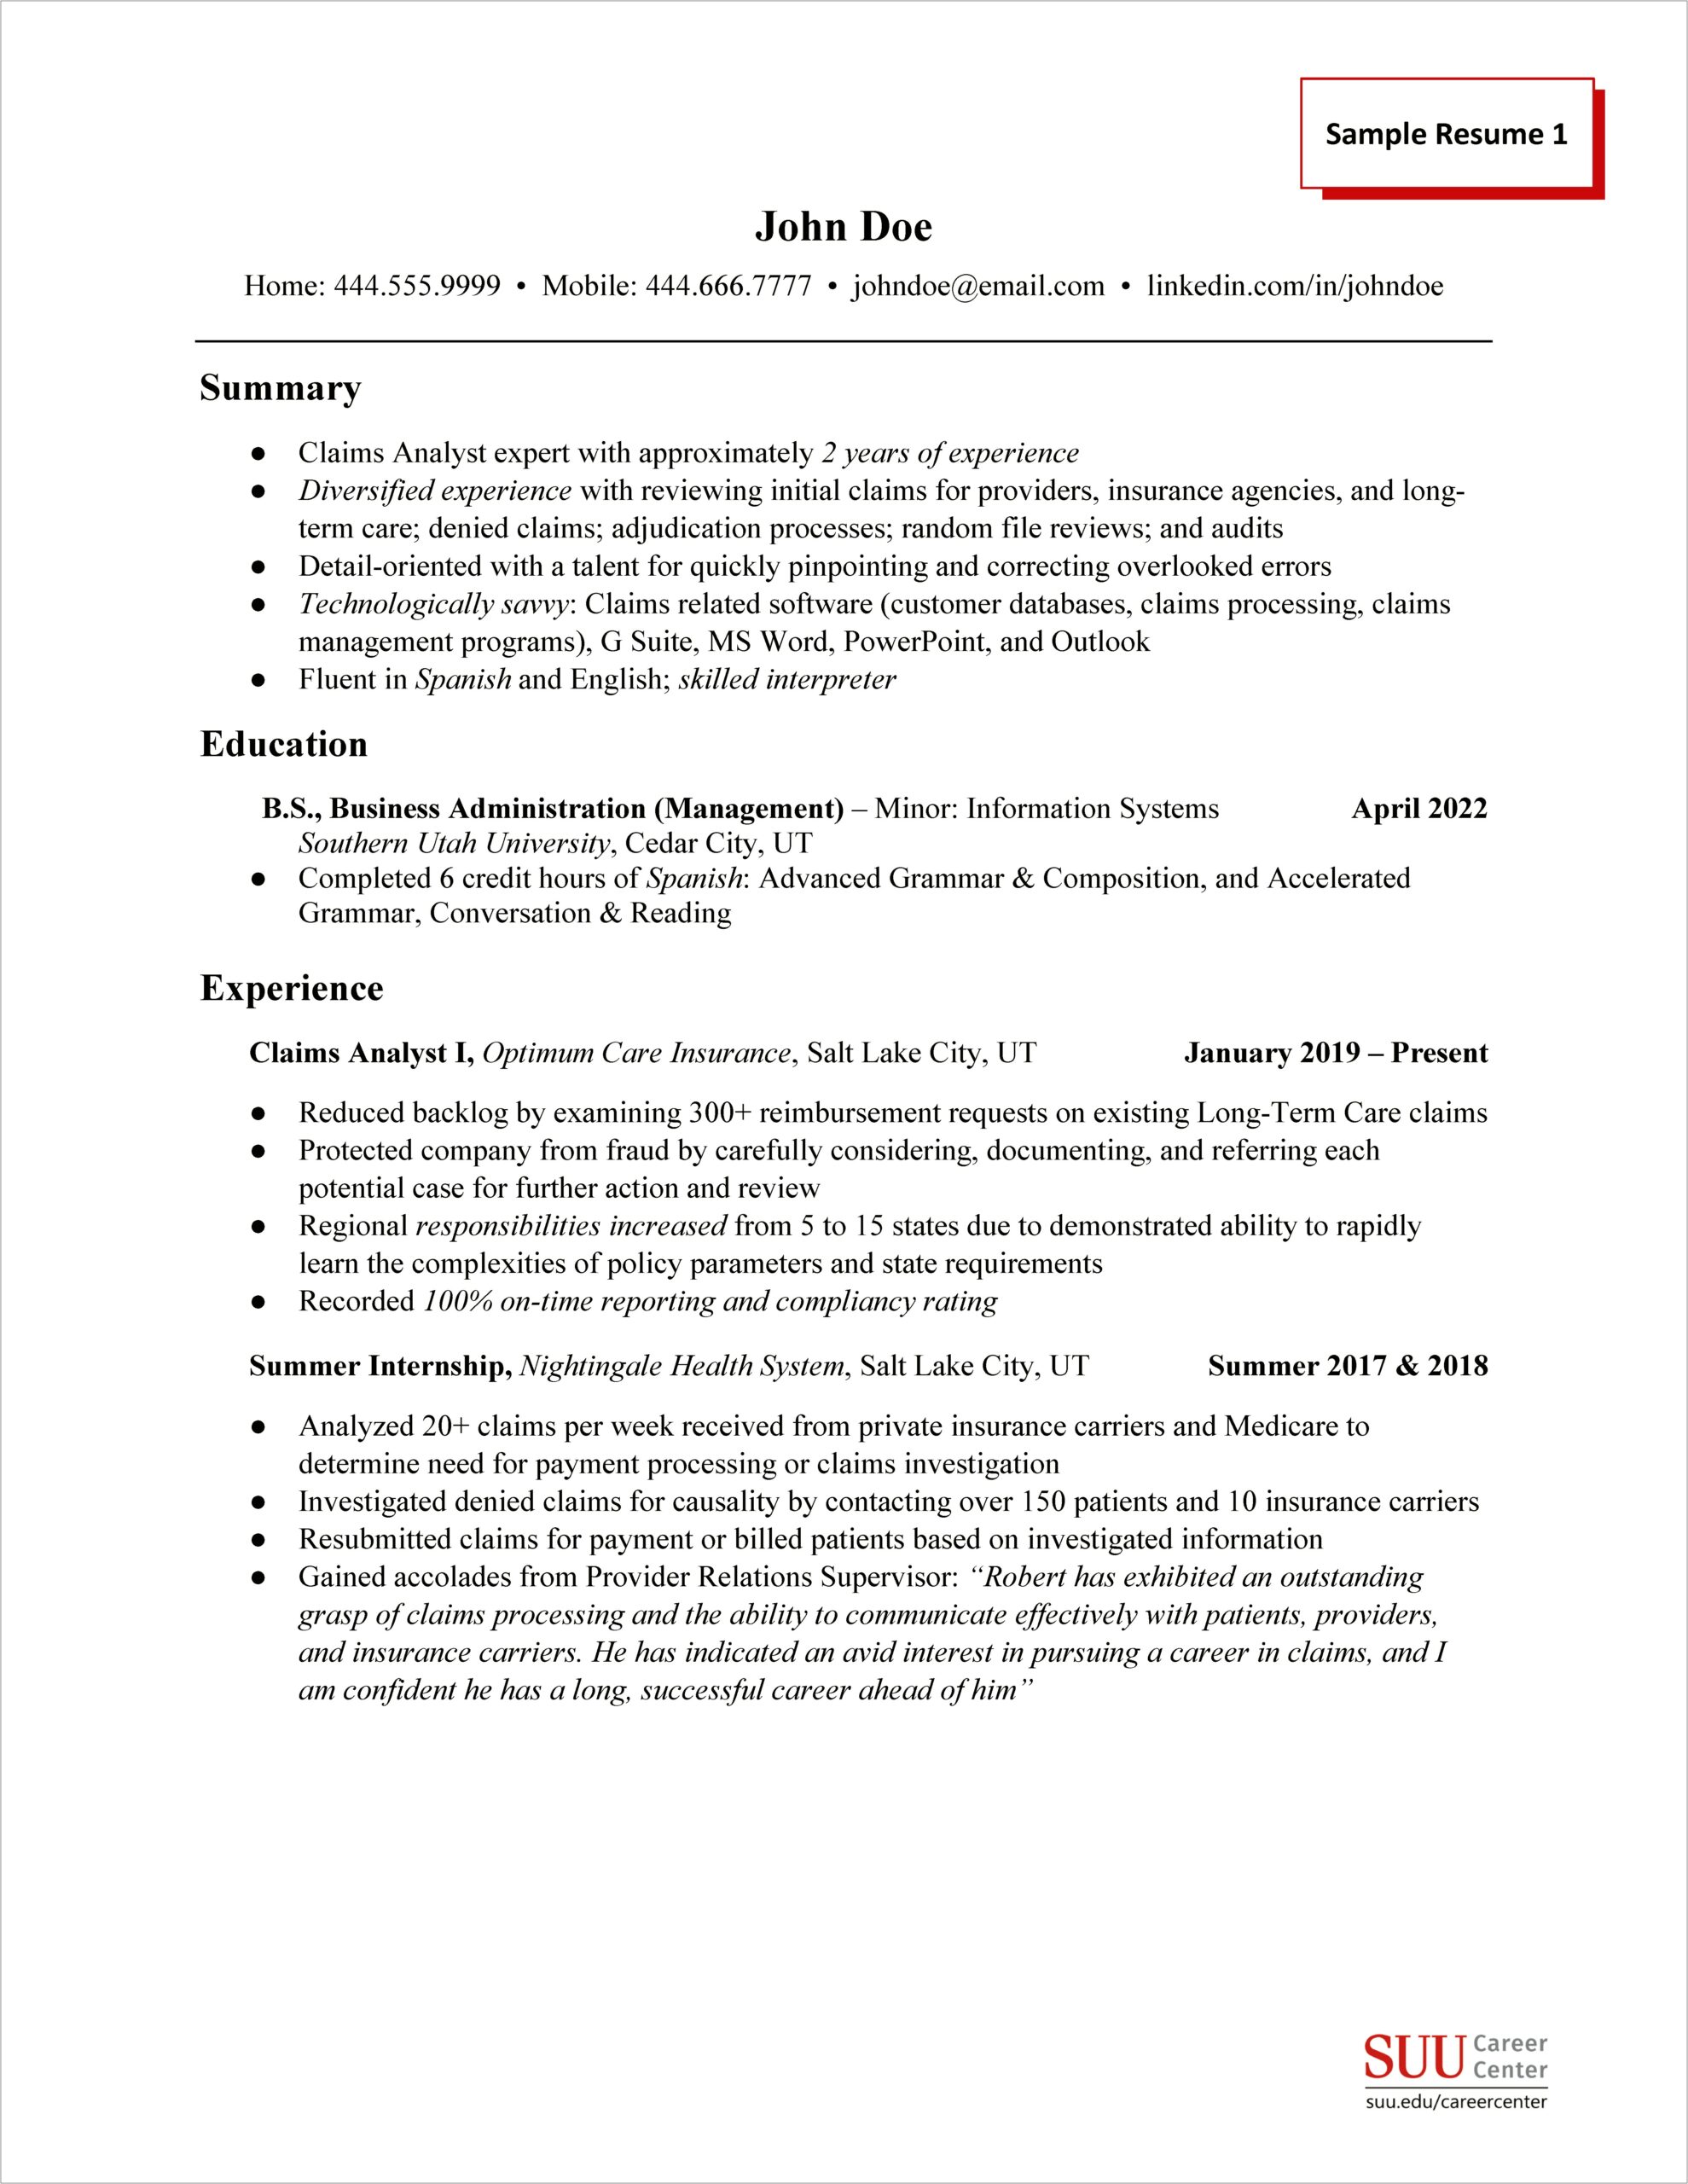 Berkeley Career Center Resume And Cover Letter